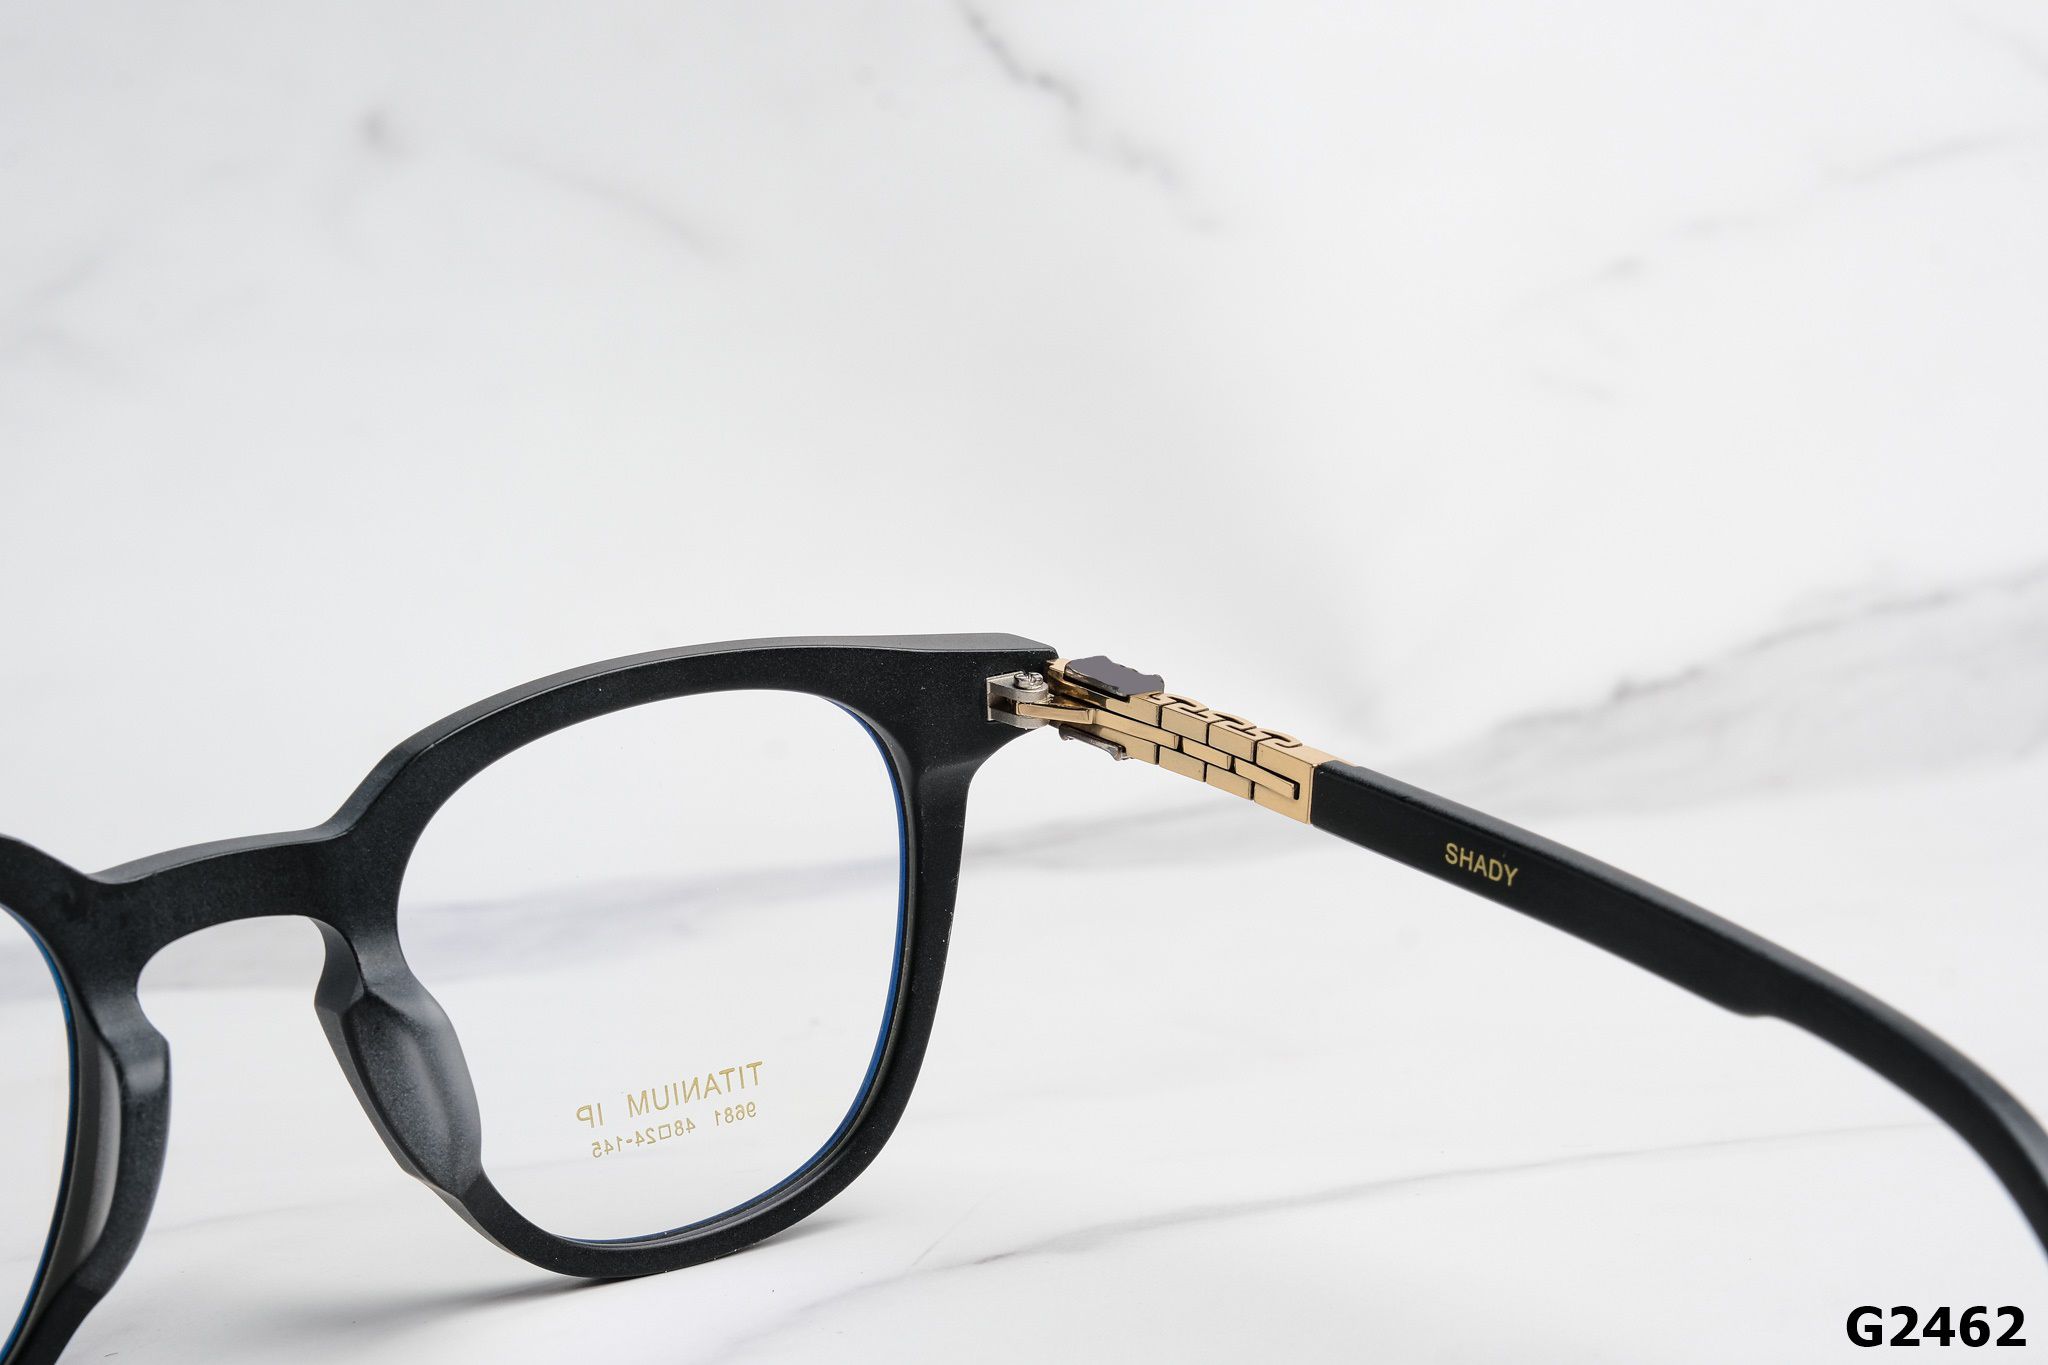  SHADY Eyewear - Glasses - G2462 